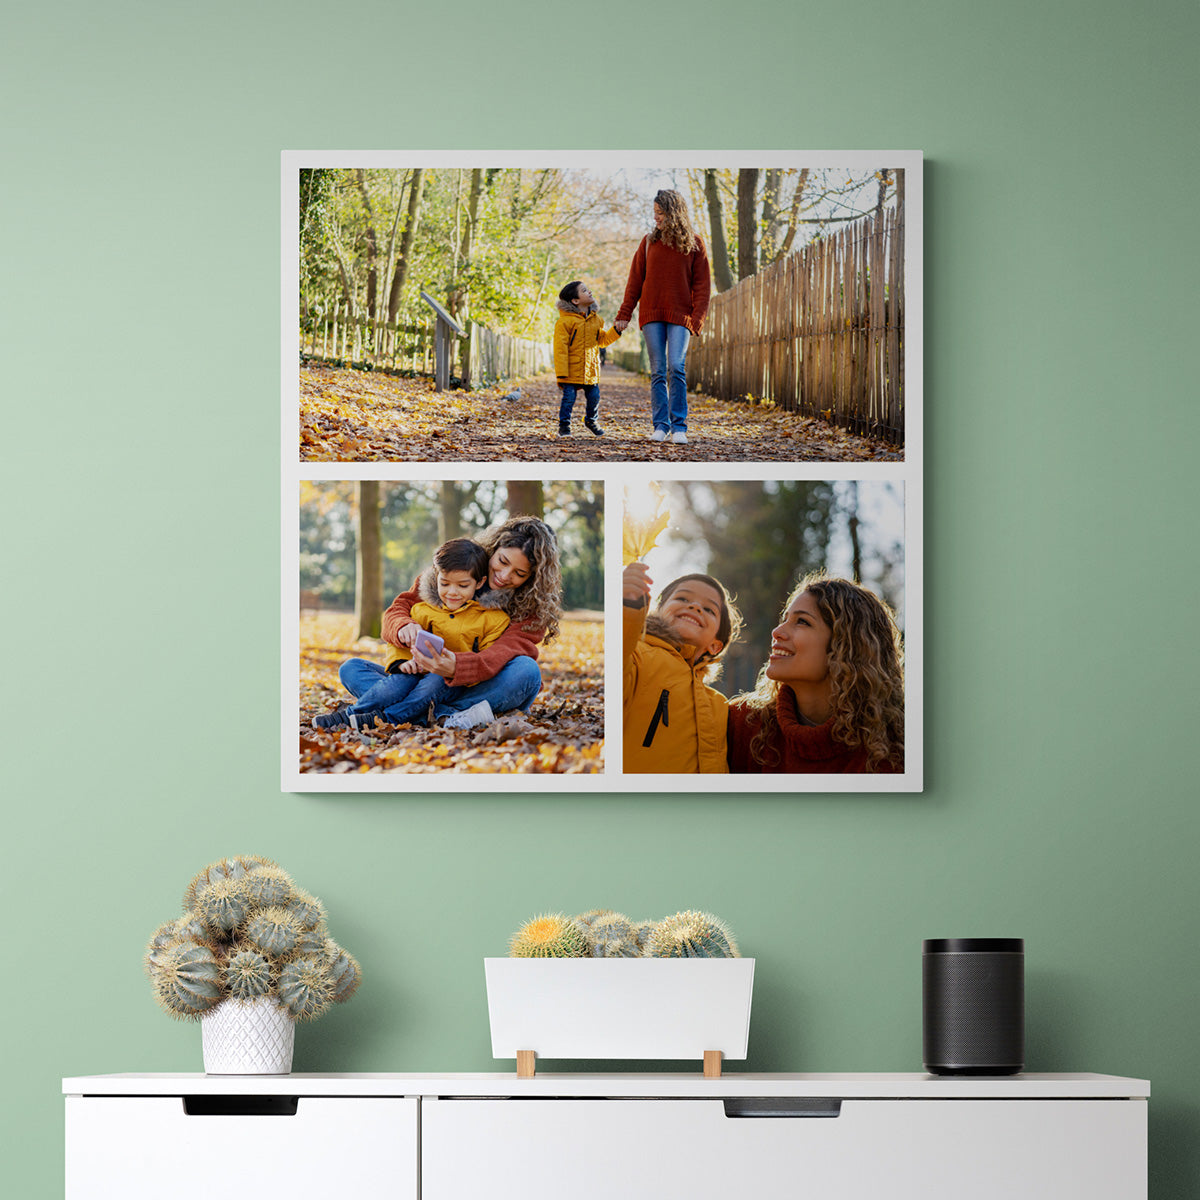 12x12 Photo Canvas Print - Family Photo Montage